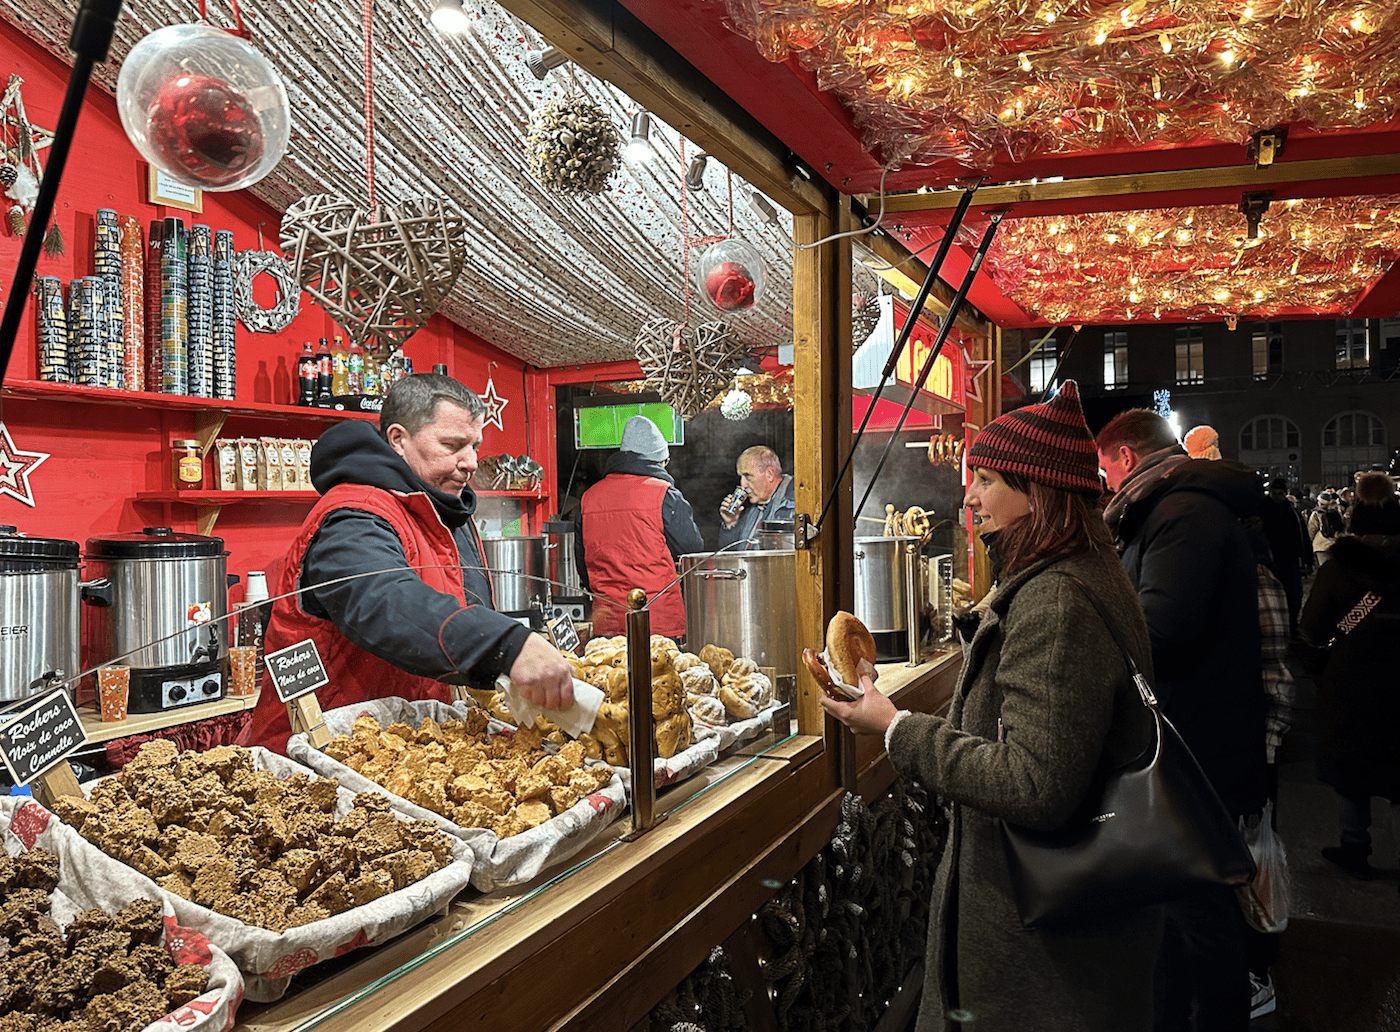 strasbourg christmas market